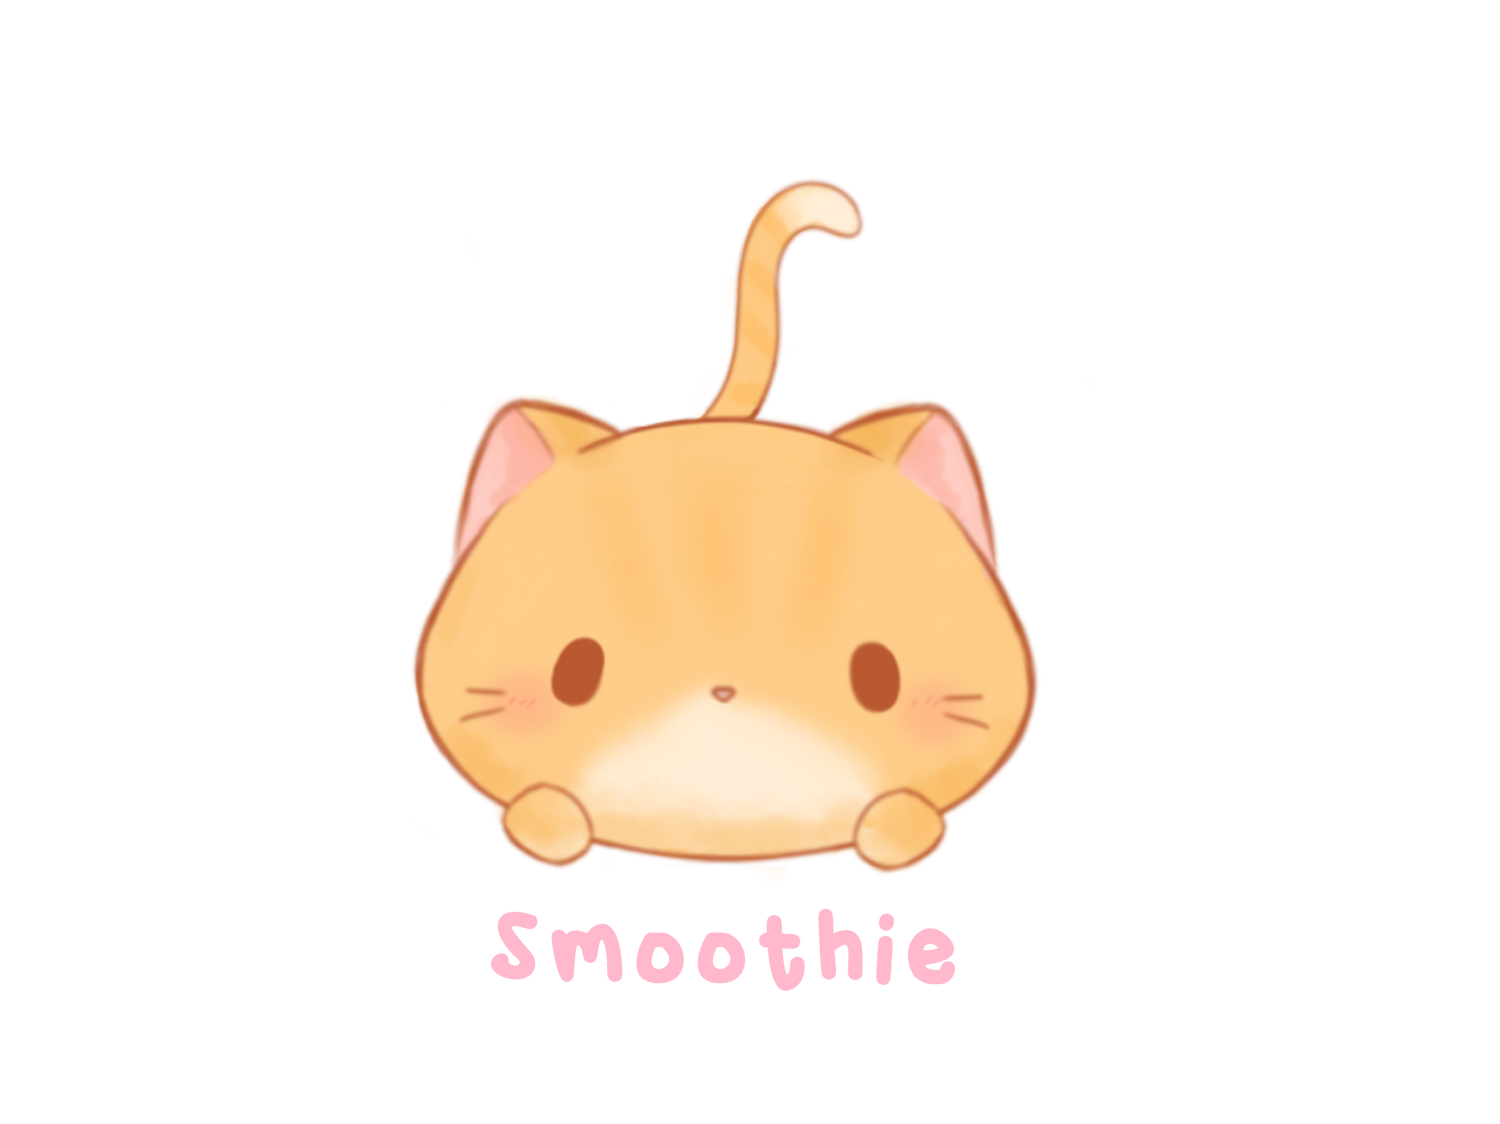 Smoothie